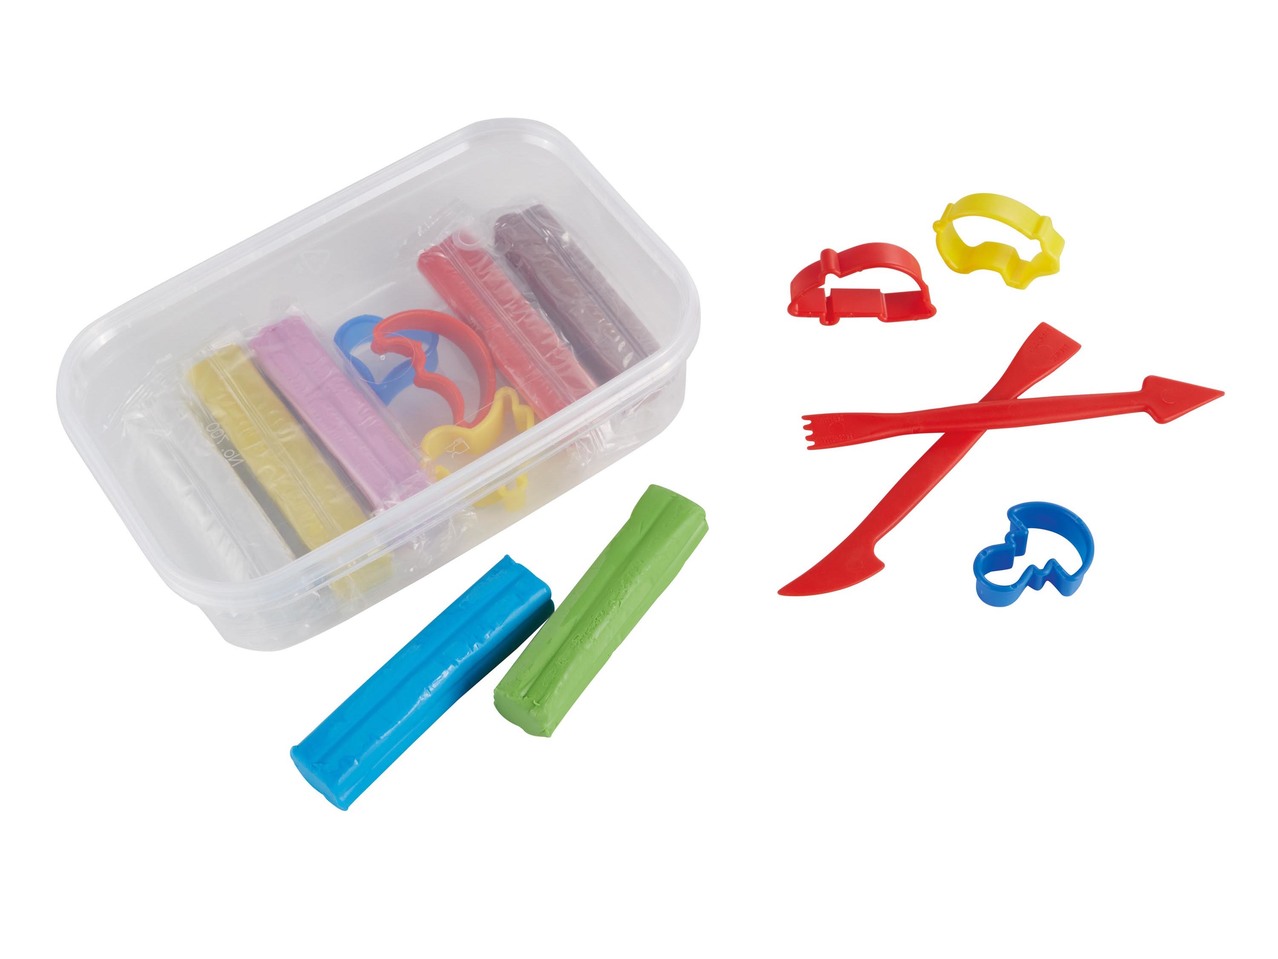 Kids' Modelling Kit/ Interlocking Games/ Finger Paints Set